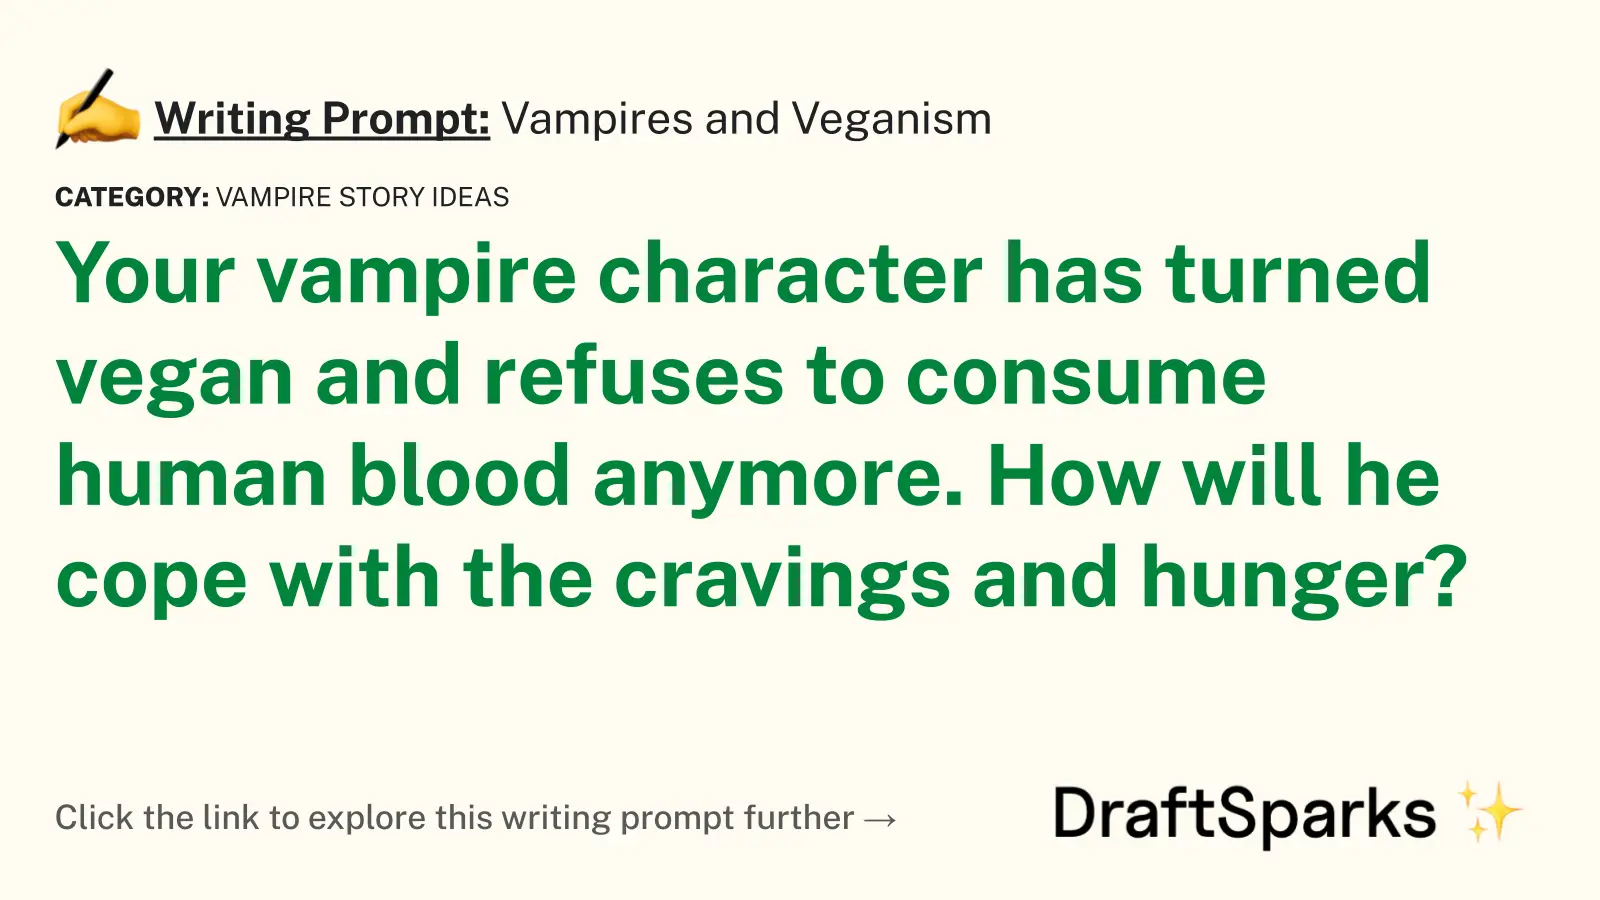 Vampires and Veganism